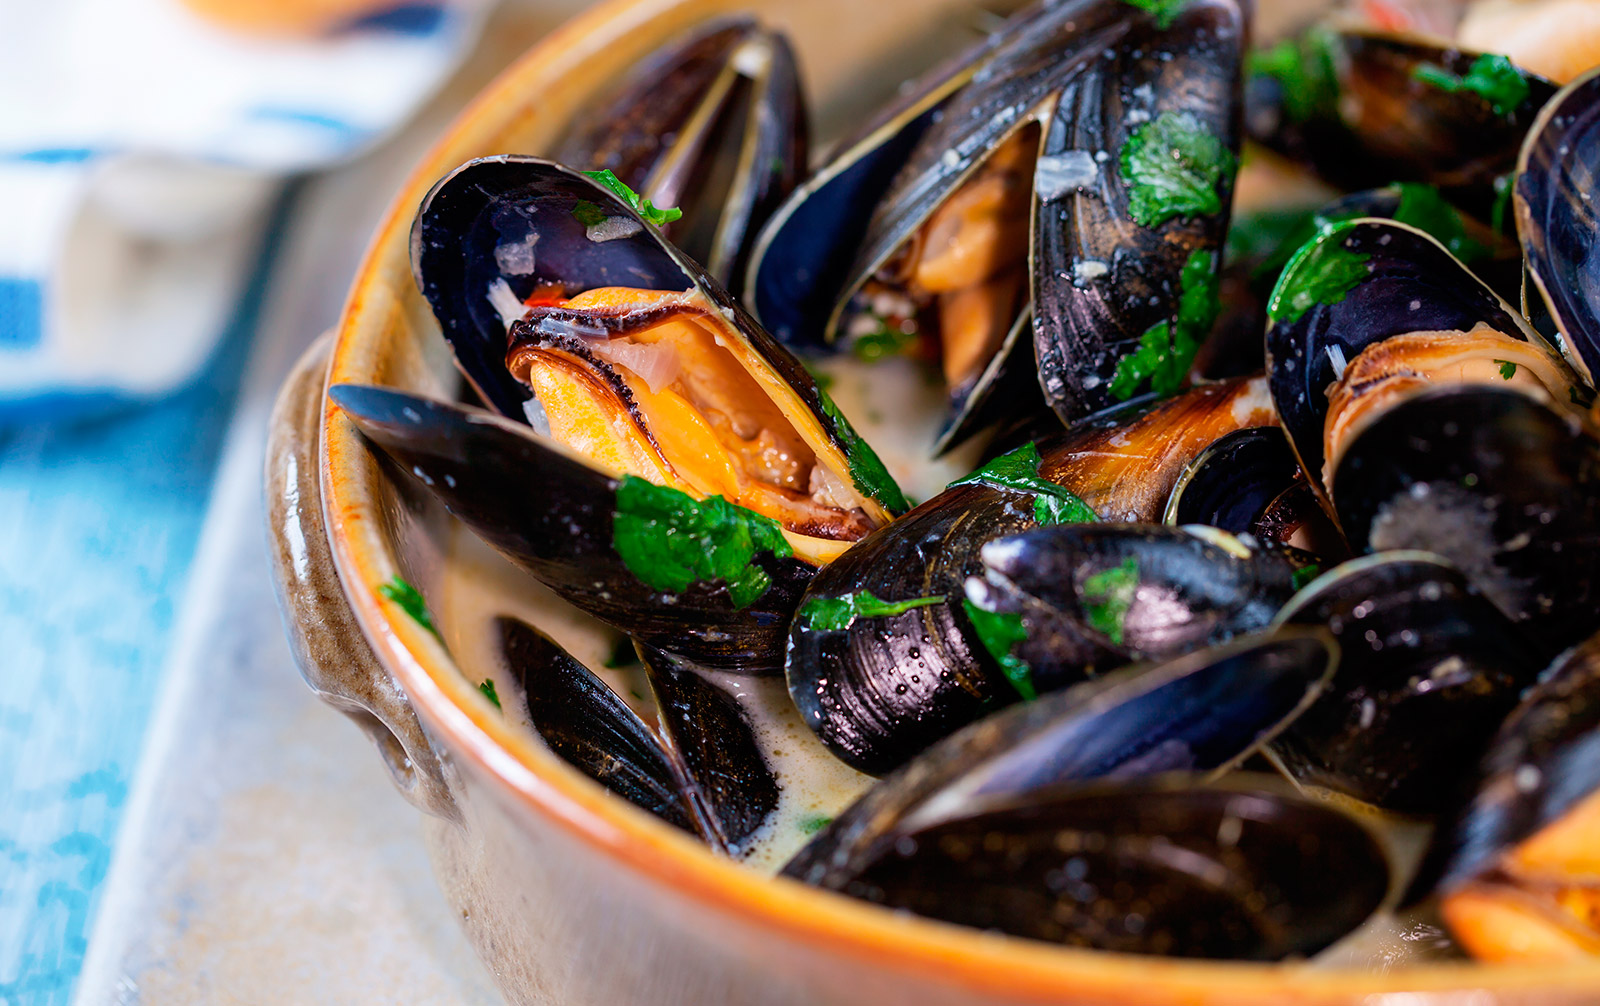 Clams (or Mussels) in “Salsa verde”